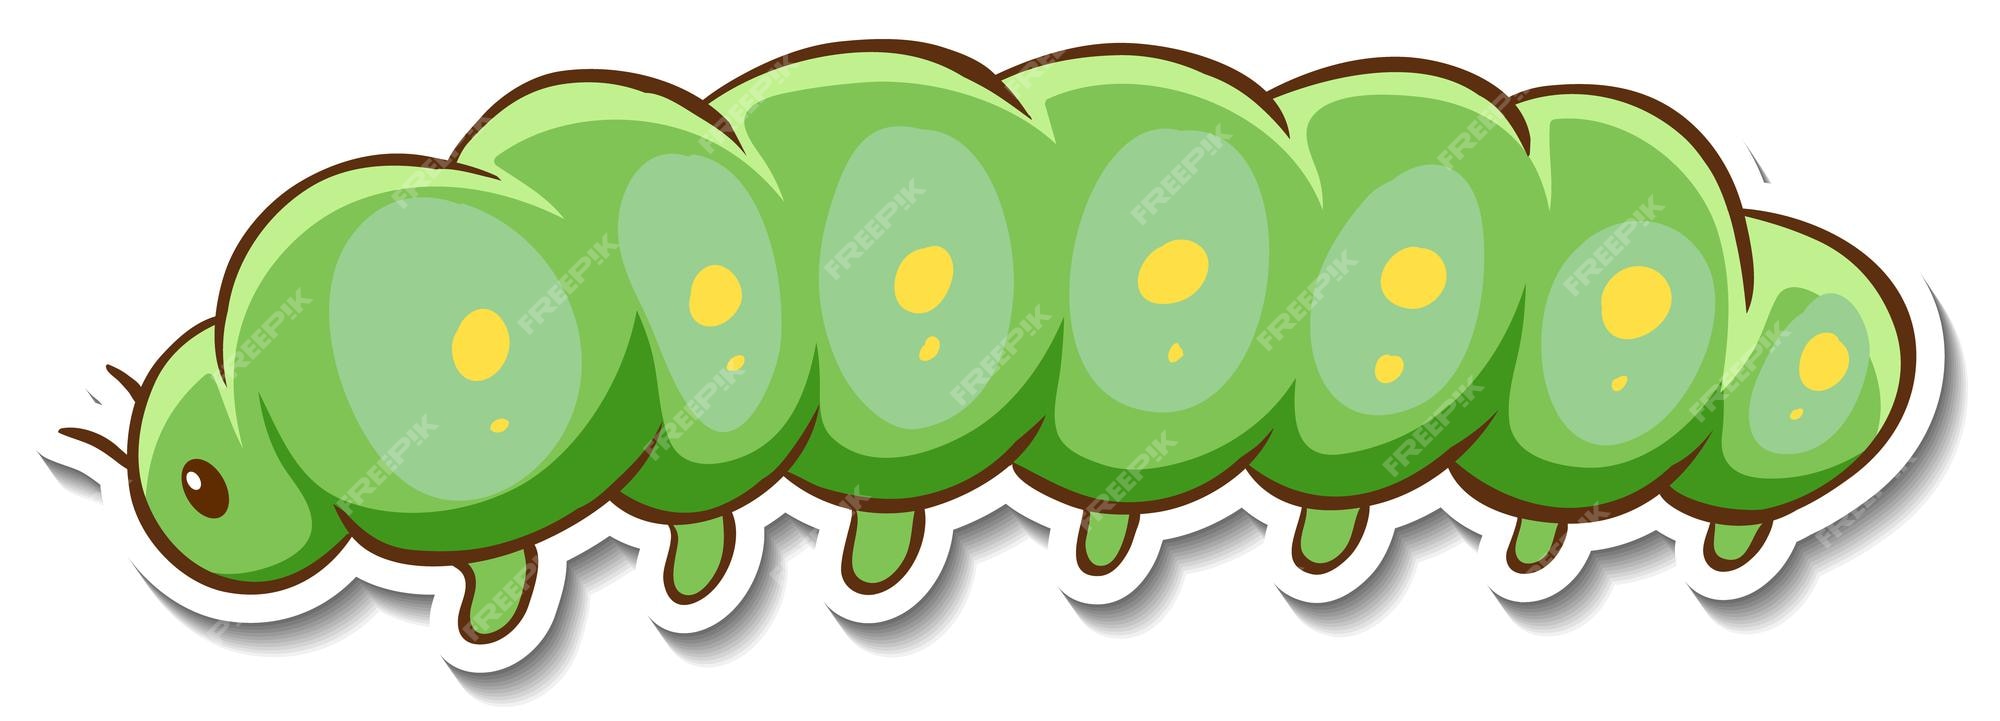 Caterpillar Cartoon Images - Free Download on Freepik